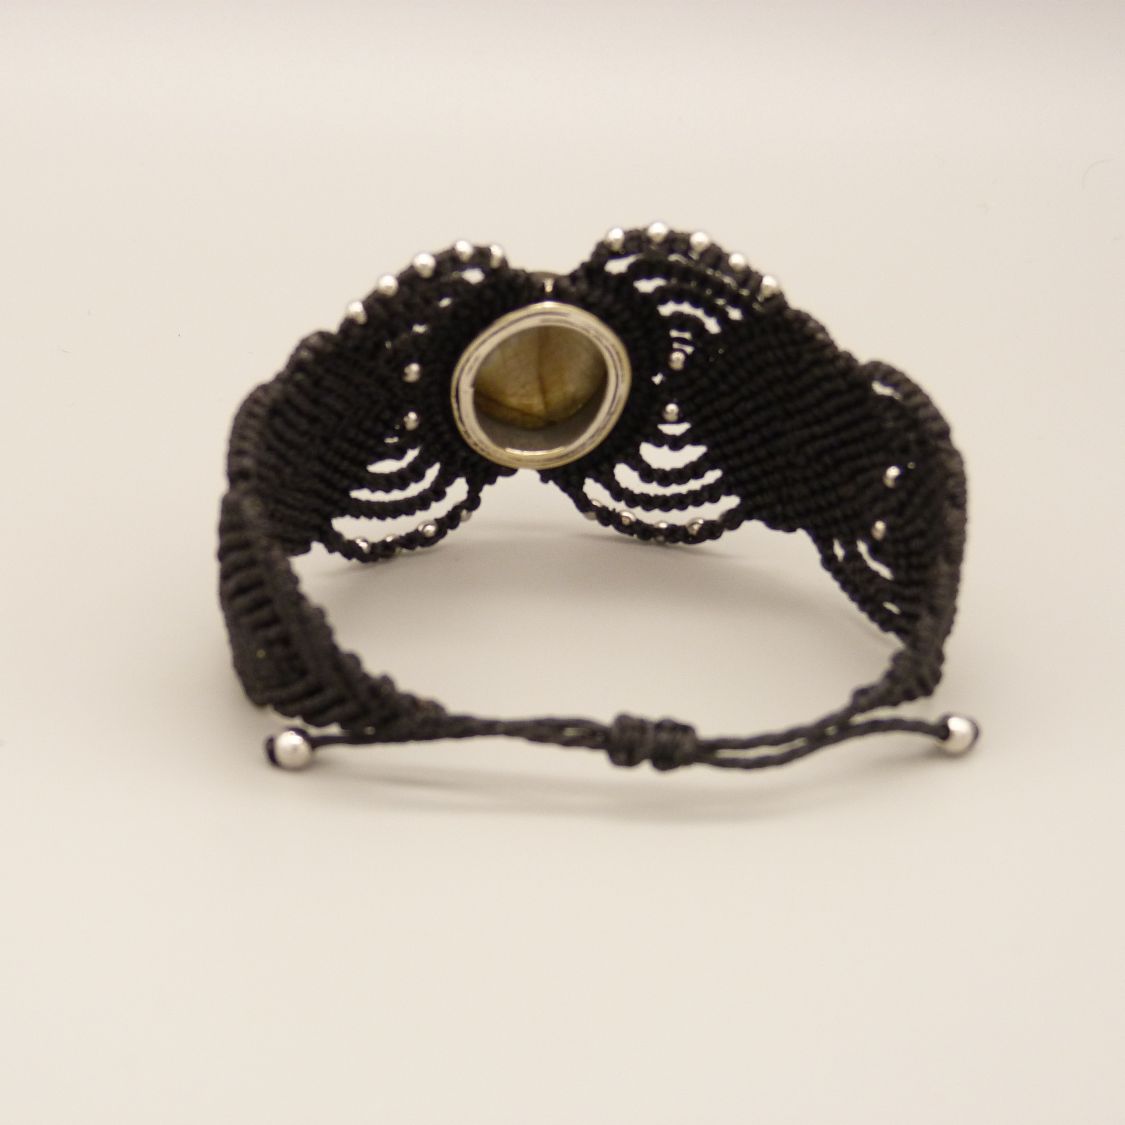 Bracelet en micro-macramé noir avec une labradorite sertie